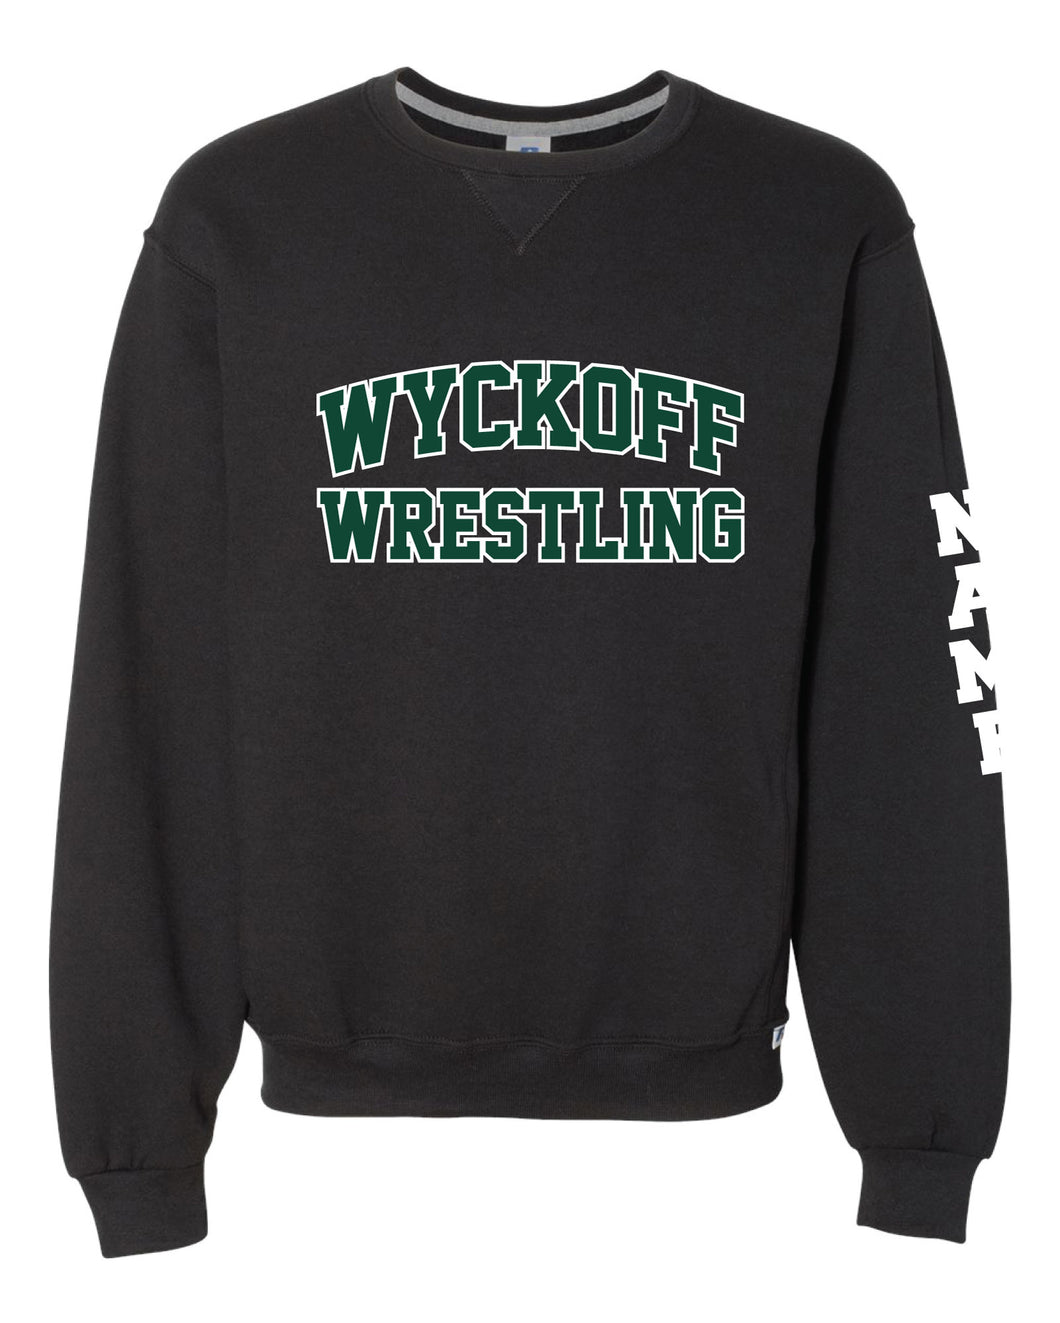 Wyckoff Wrestling Russell Athletic Cotton Crewneck Sweatshirt - Black